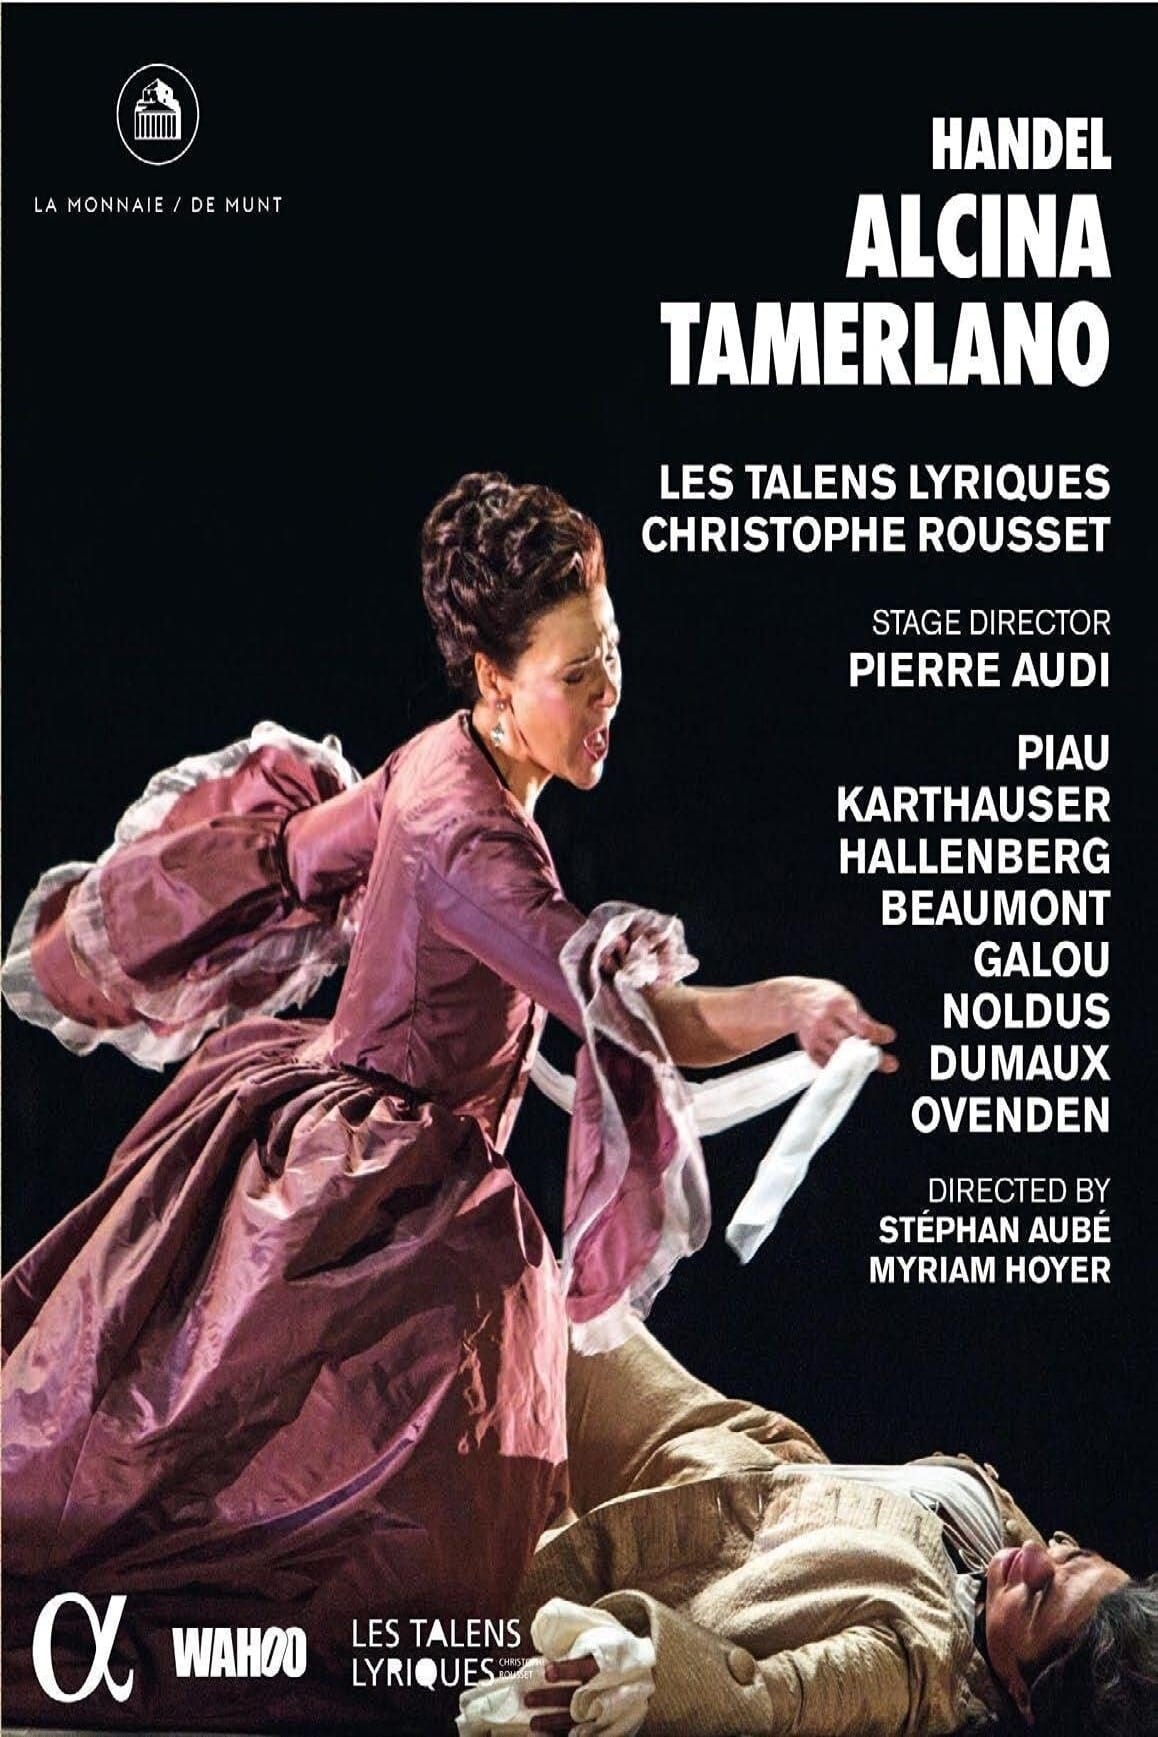 Handel's Tamerlano